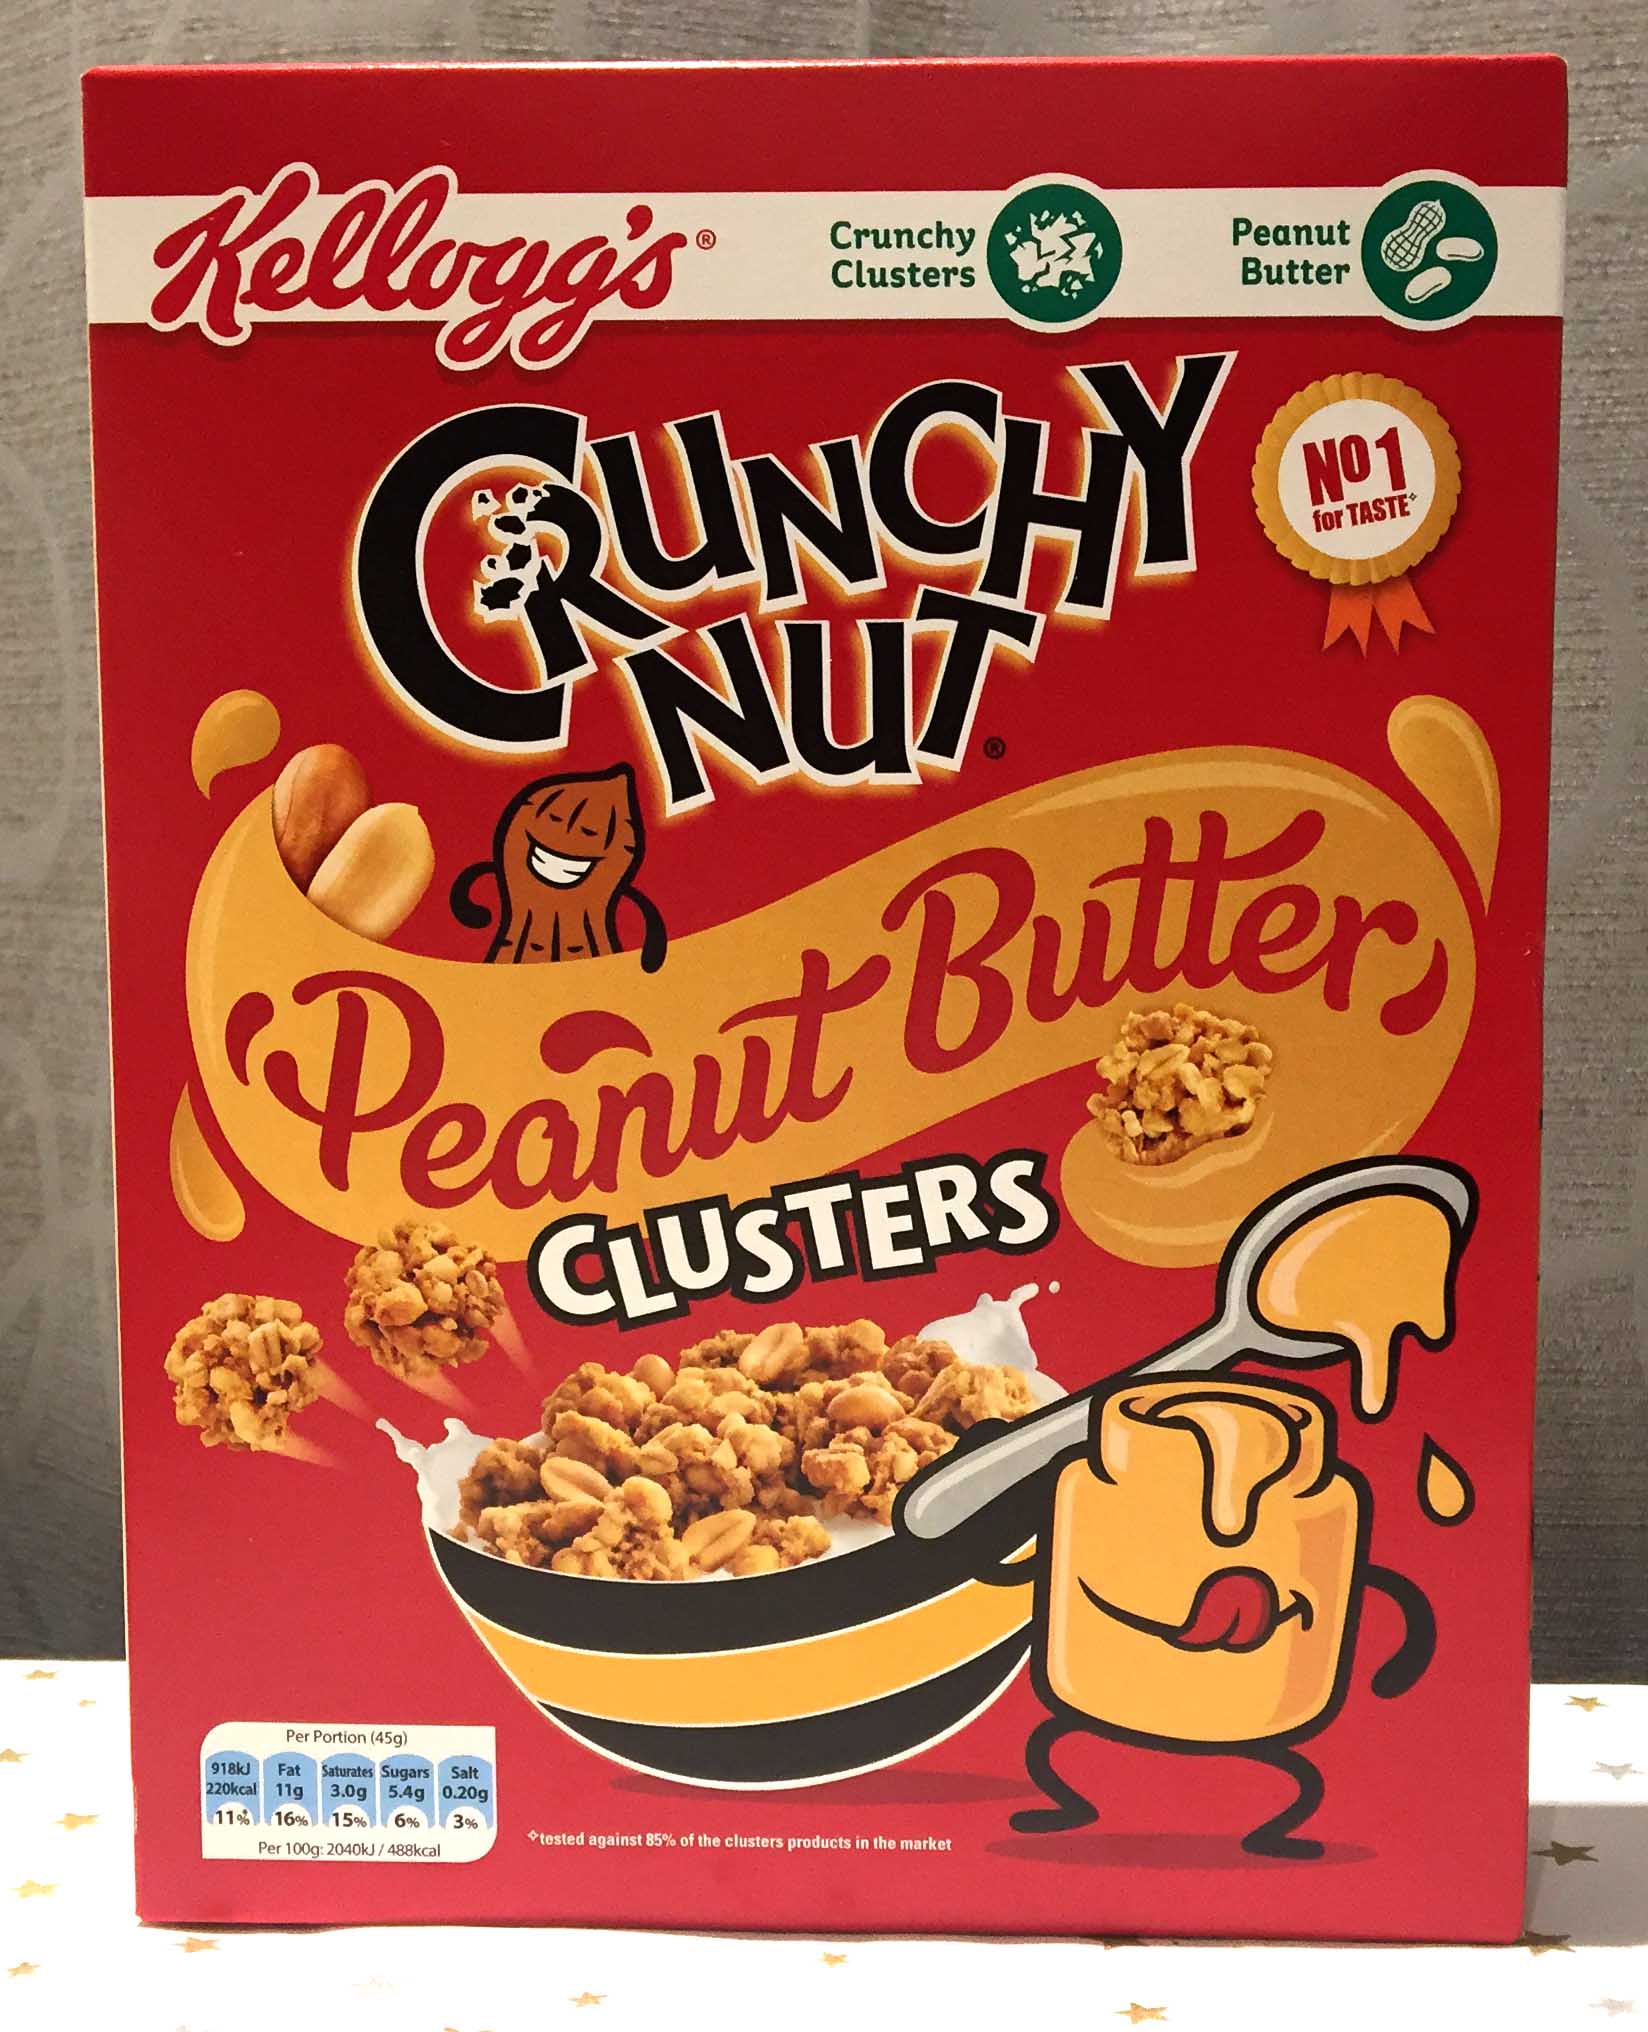 Crunchy Nut Clusters, Peanut